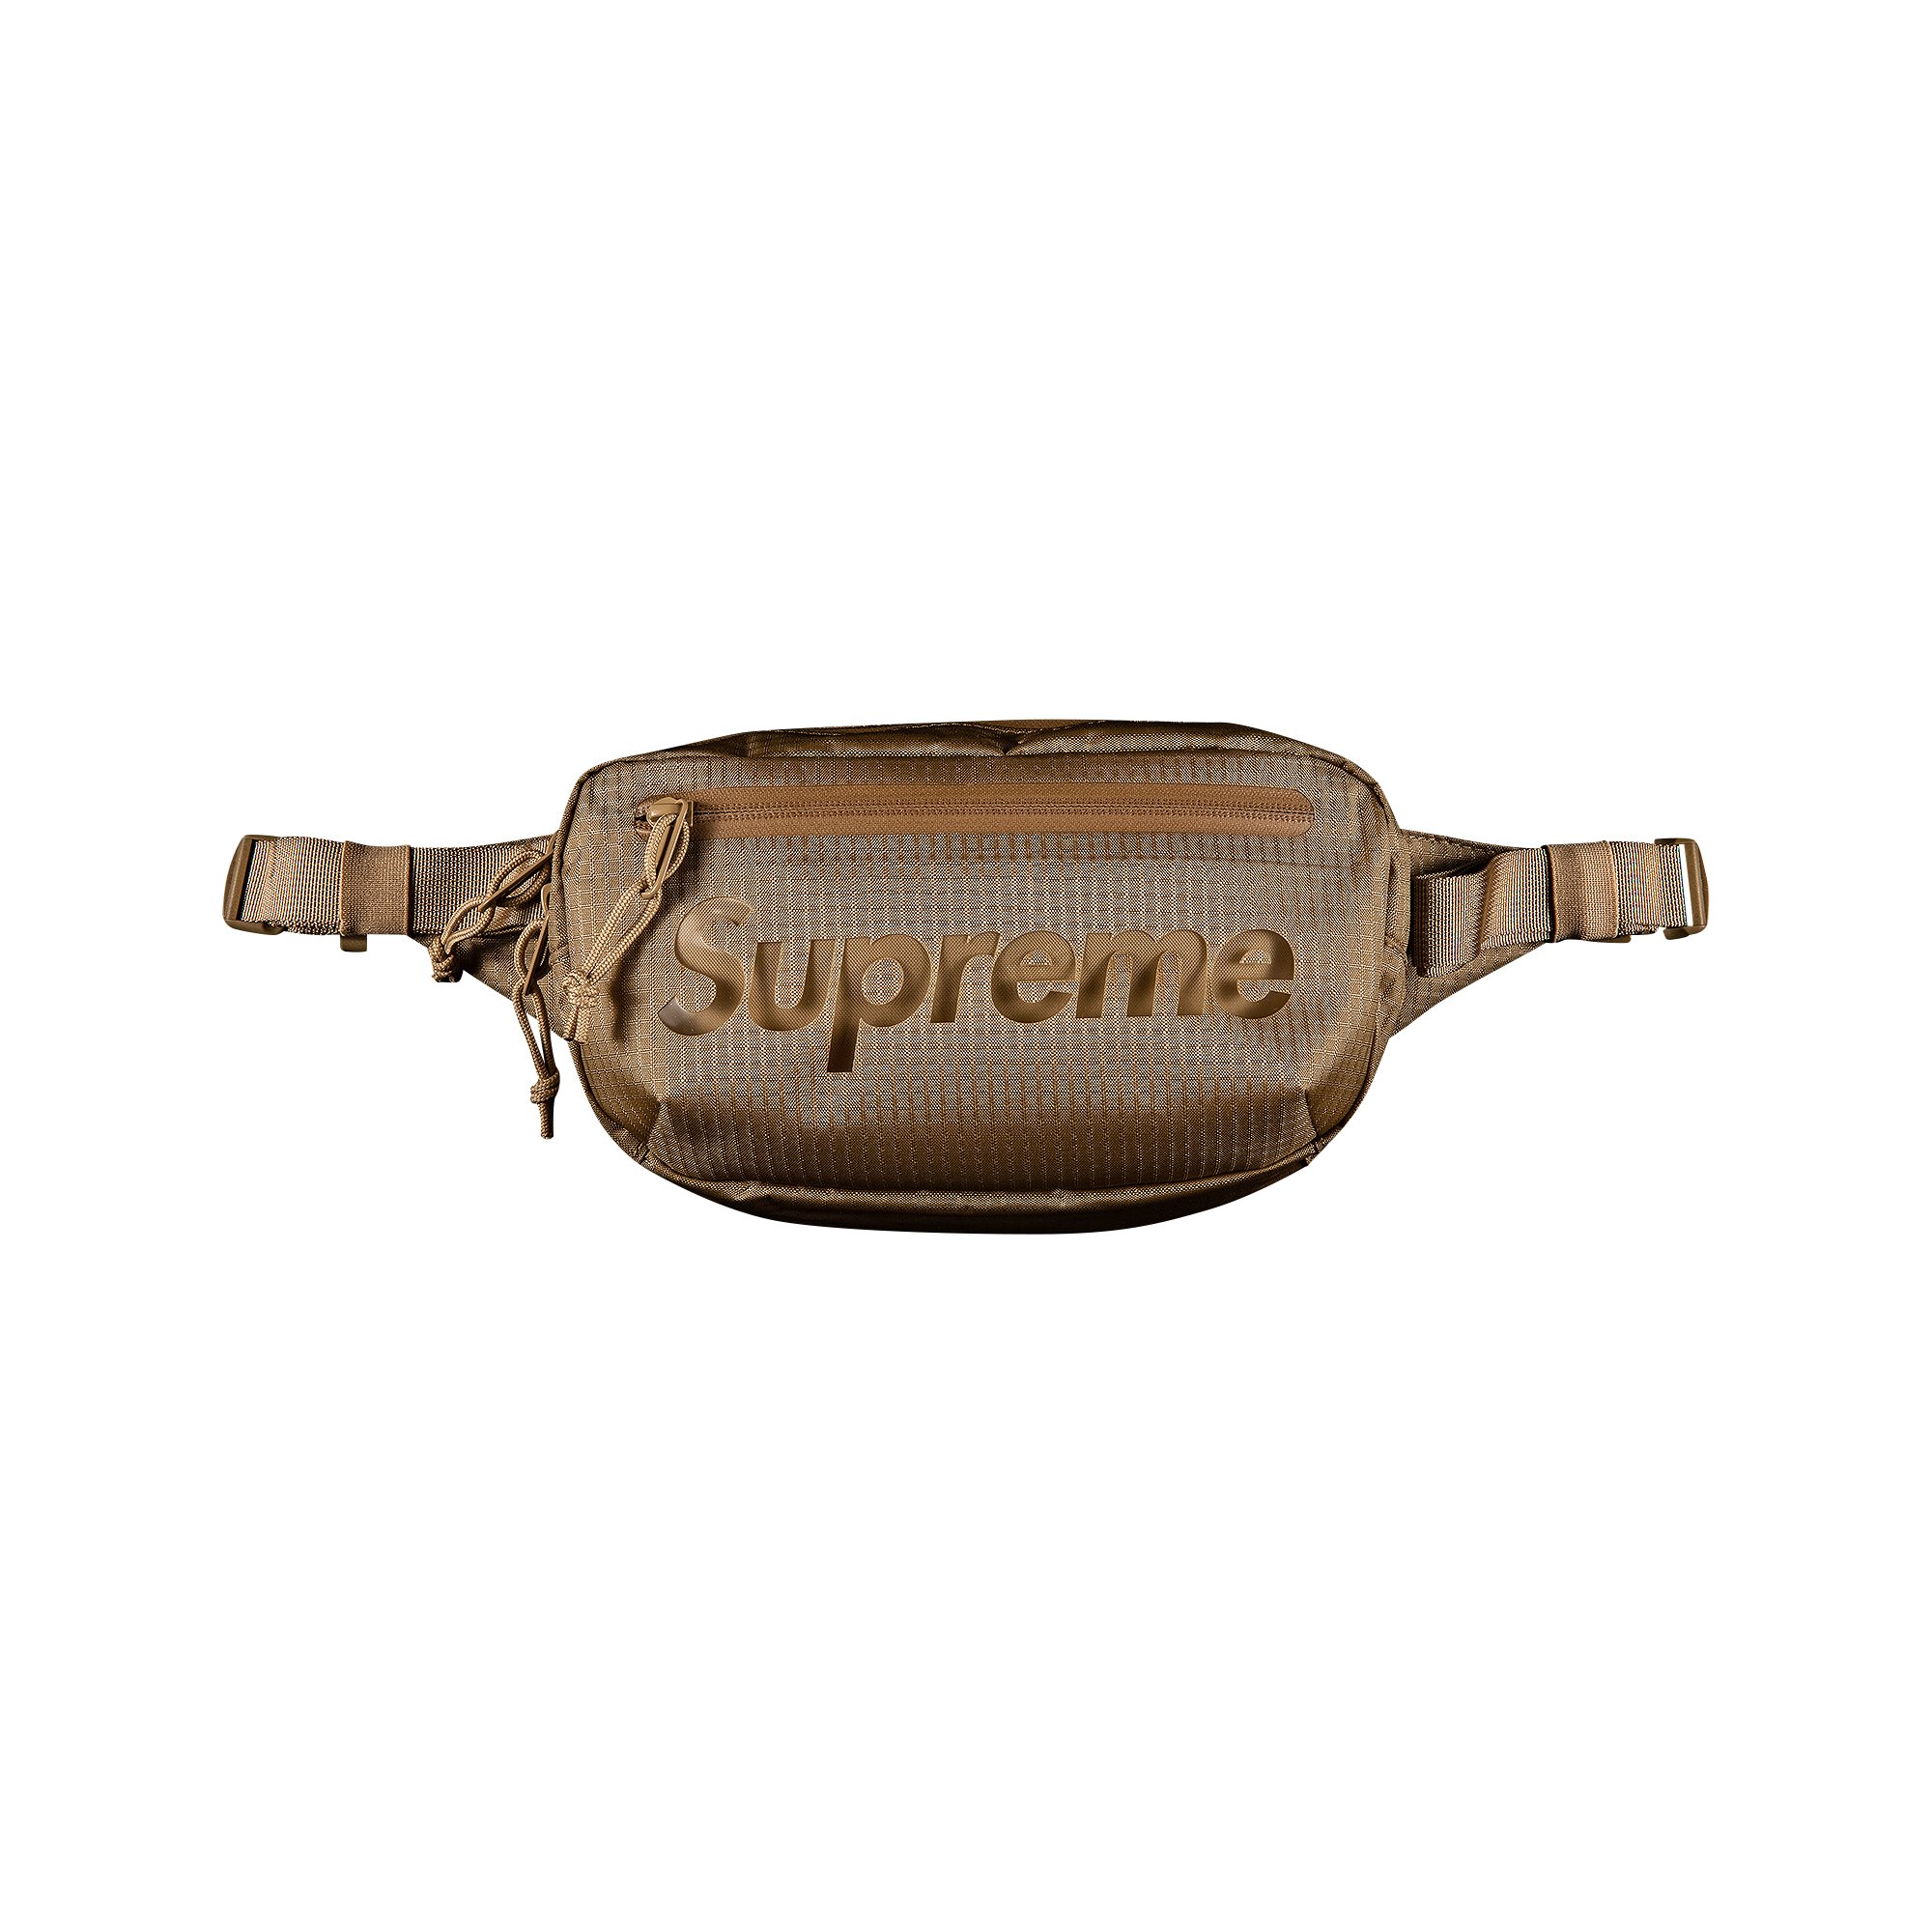 Buy Supreme Waist Bag 'Tan' - SS21B23 TAN | GOAT